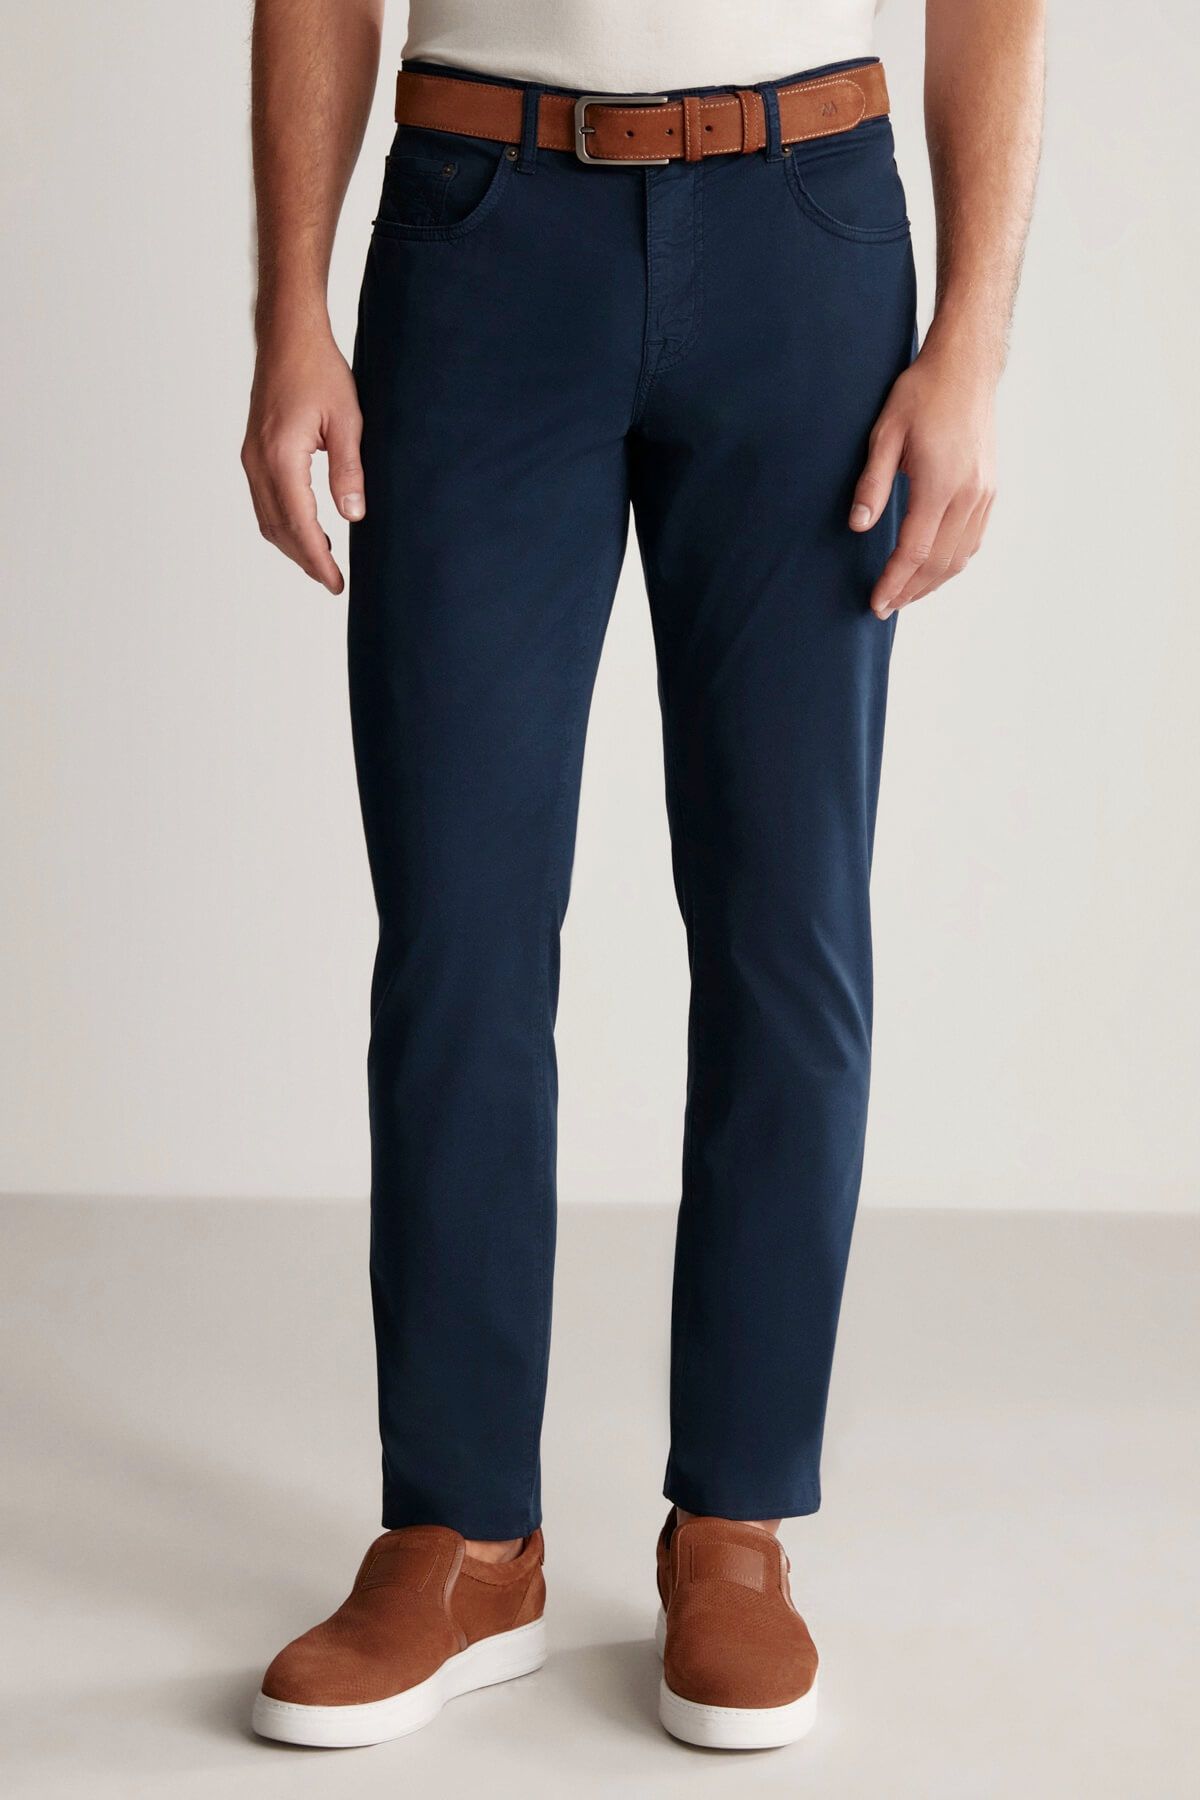 Hemington Slim Fit 5 Cep Lacivert Yazlık Pantolon